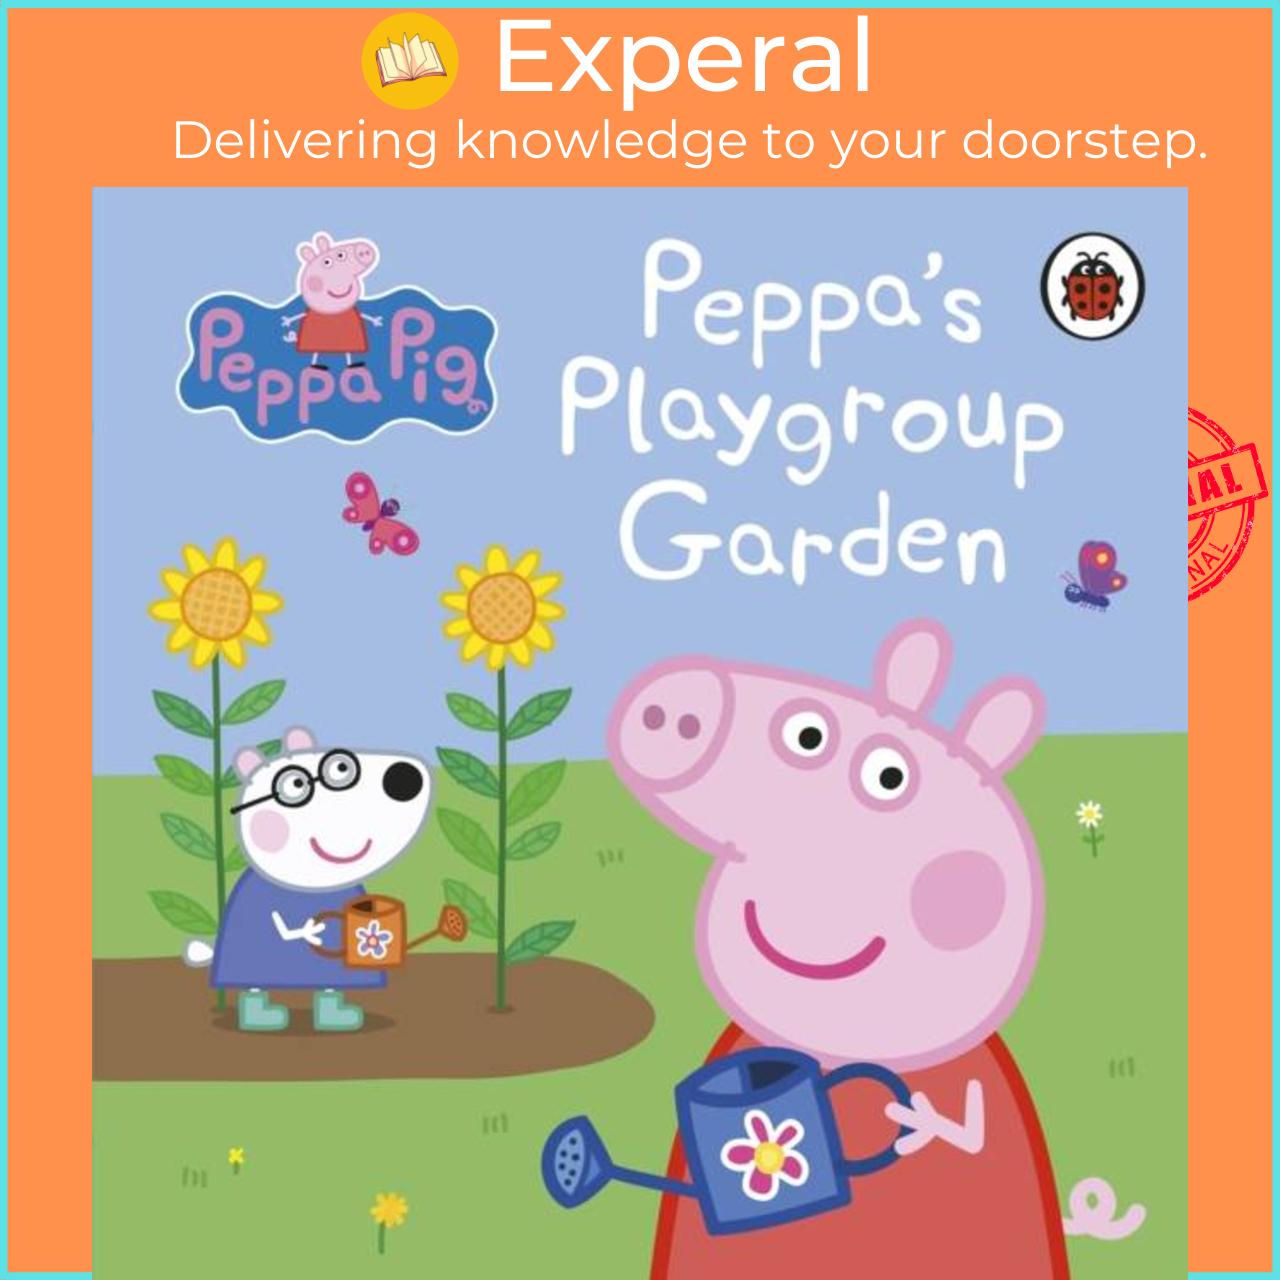 Sách - Peppa Pig: Peppa's Playgroup Garden by Peppa Pig (UK edition, boardbook)